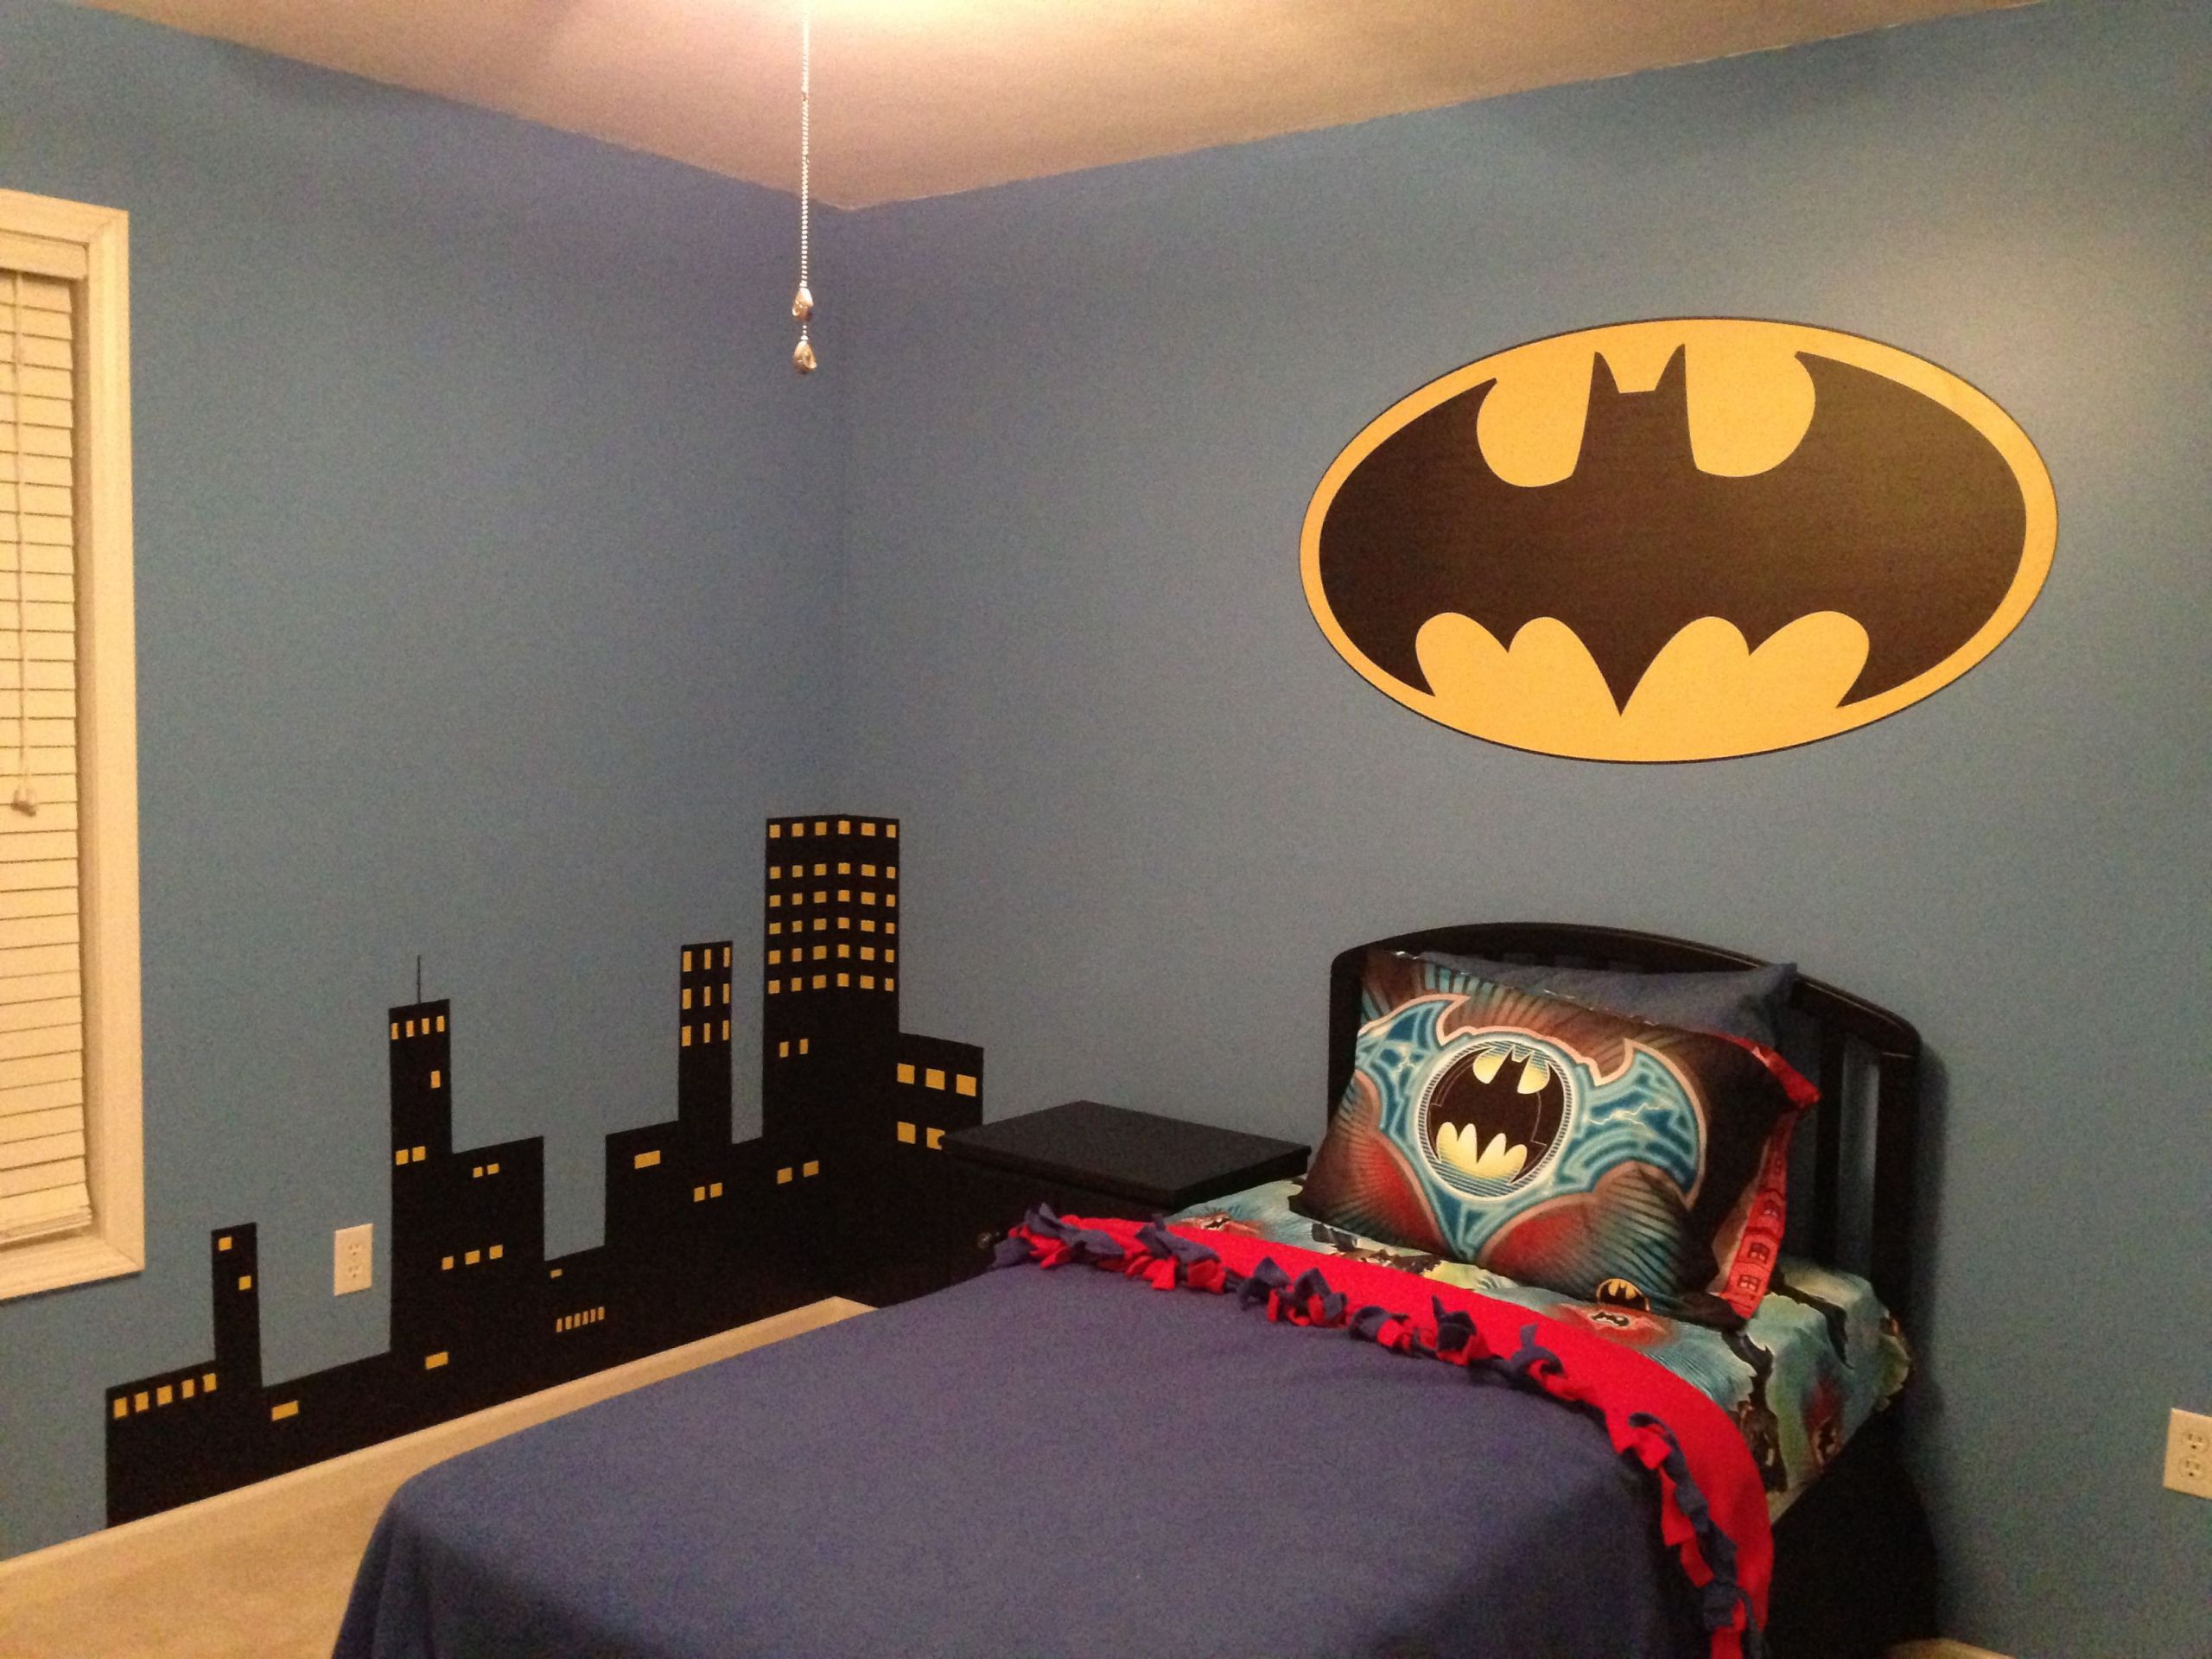 Batman Bedroom Wallpaper
 Cityscape for my son s batman room DIY